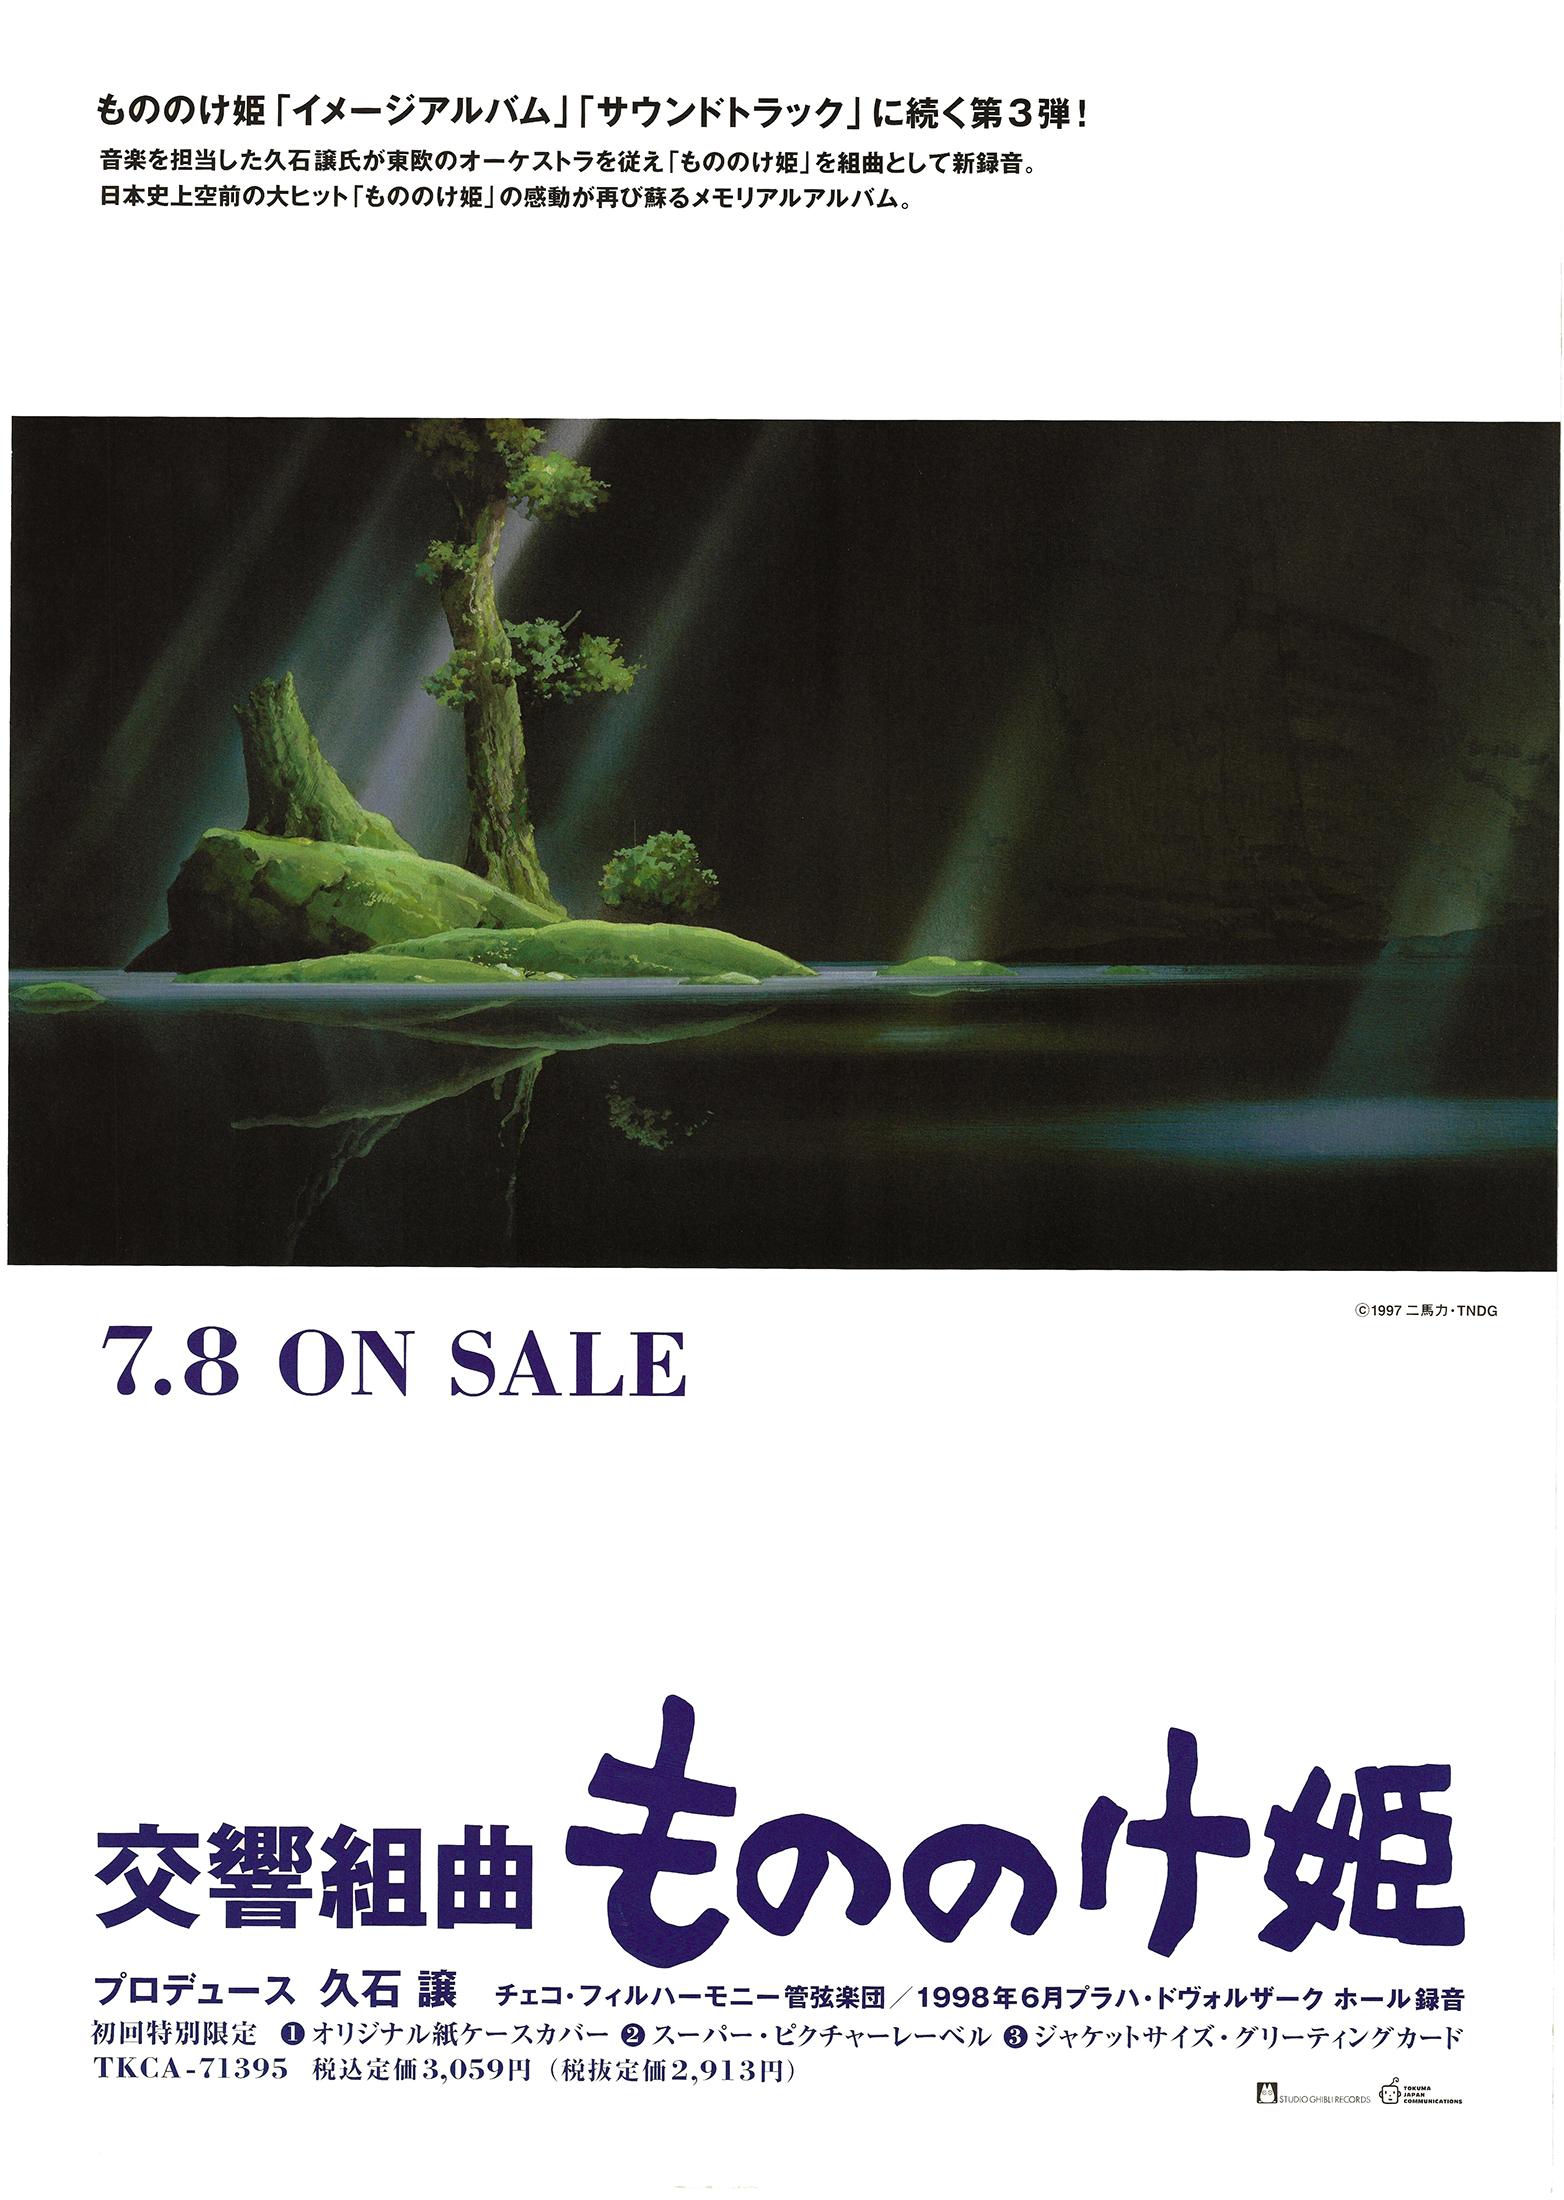 Unknown Print - Princess Mononoke Original Vintage Soundtrack Poster, Hisaishi, Studio Ghibli